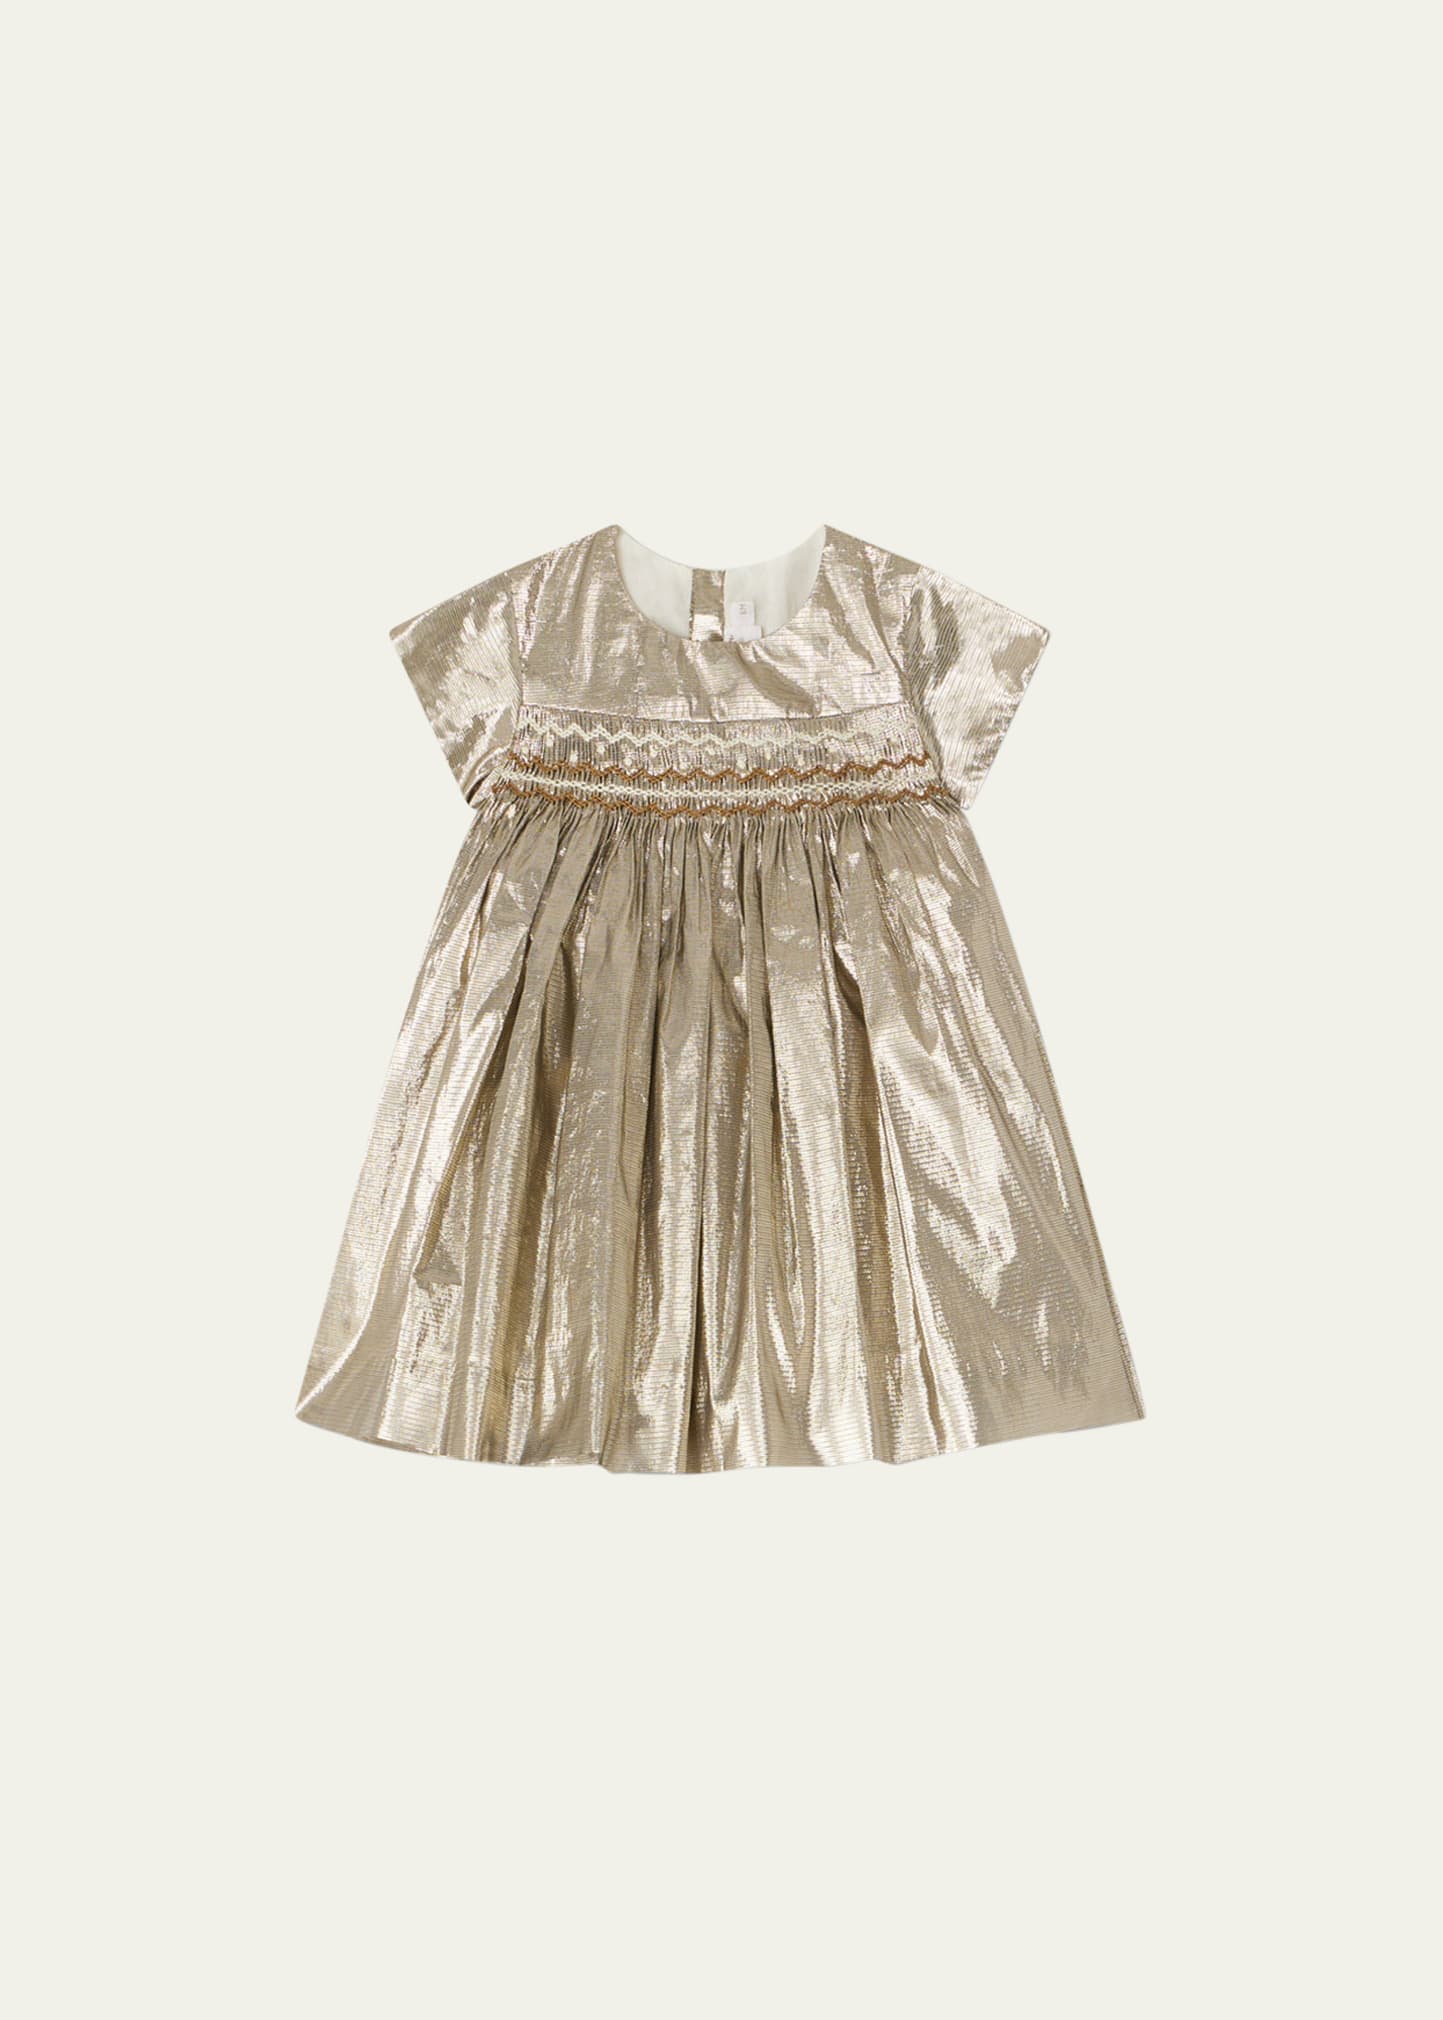 Bonpoint Girl's Duchesse Embroidered Silk Dress, Size 6M-3